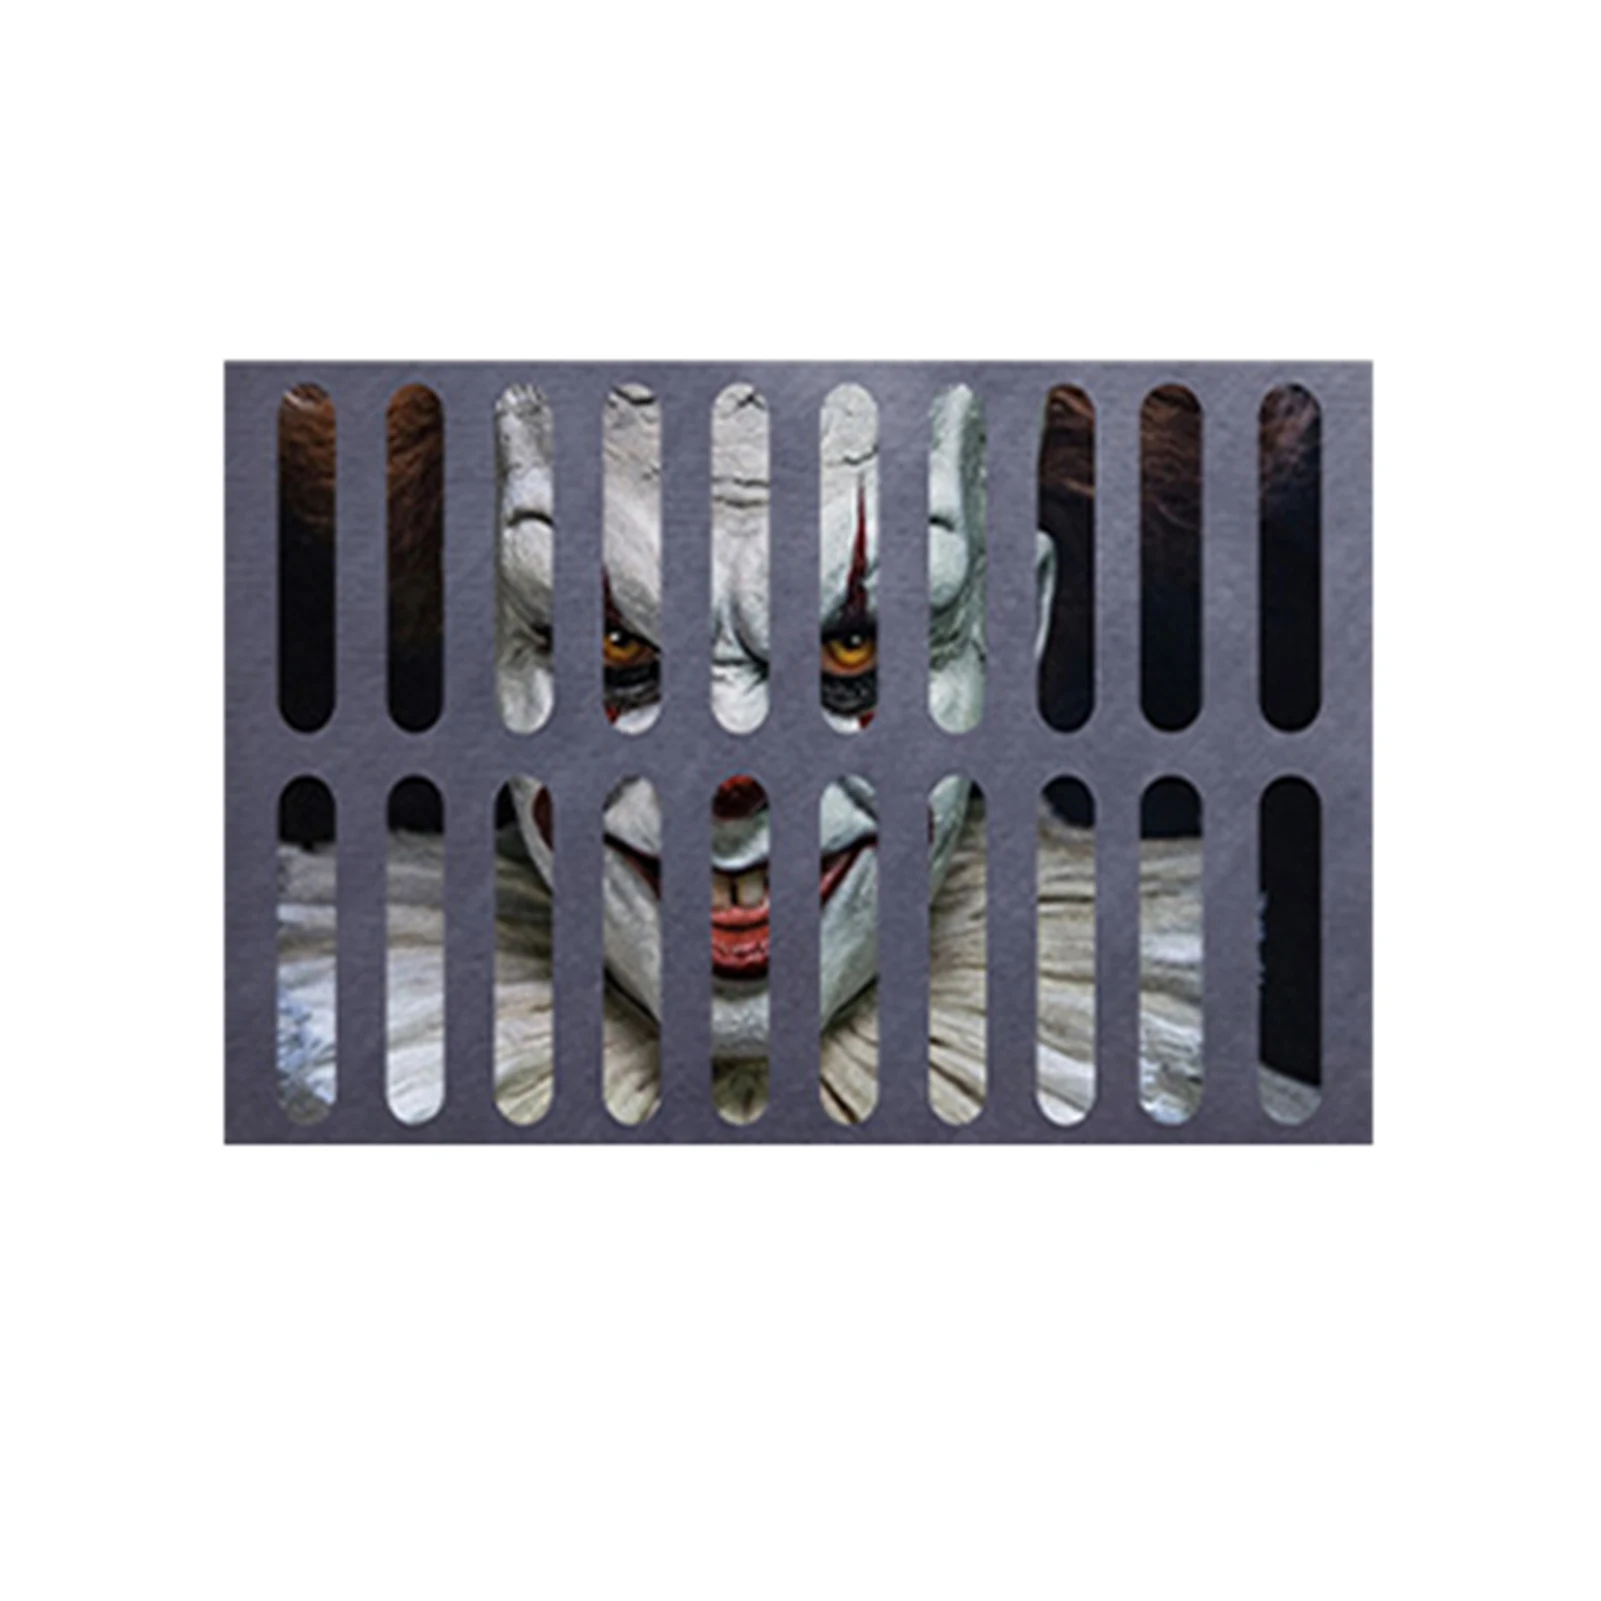 Manhole Cover Clown Carpet Multi-purpose Printed Door Mat Non-Slip Absorbent Pad For Kitchen Bedroom Bathroom manhole cover clown carpet multi purpose printed door mat non slip absorbent pad for kitchen bedroom bathroom